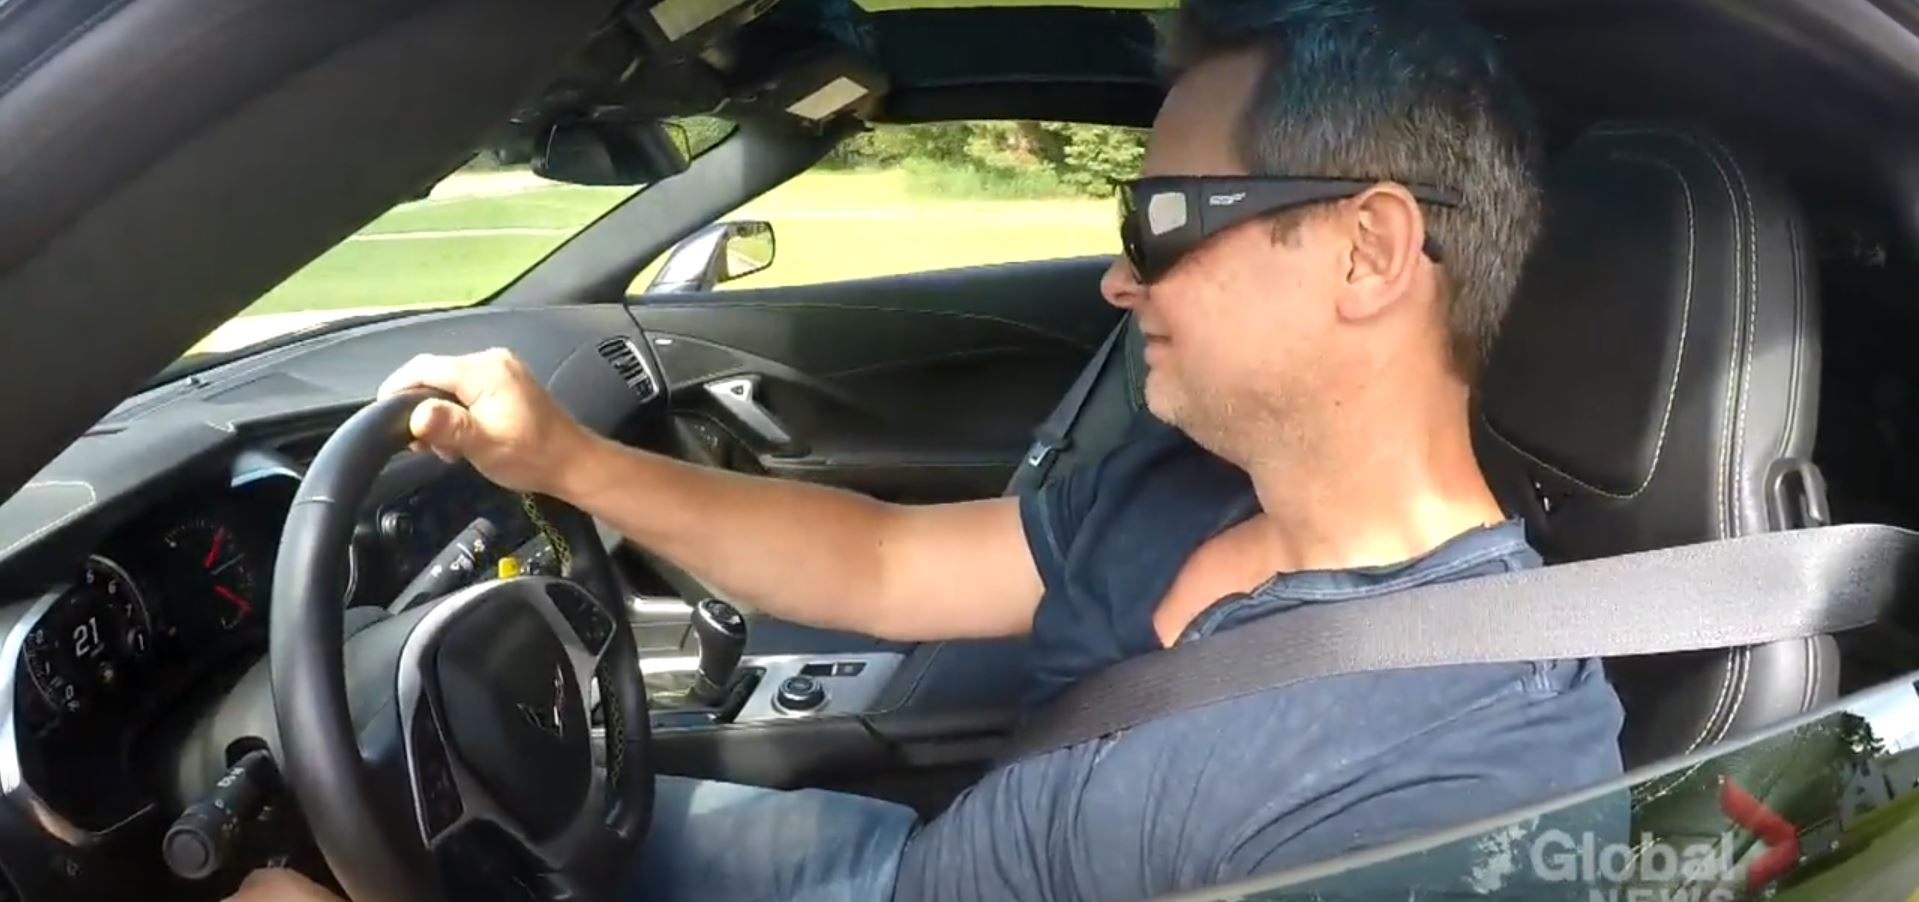 Blind man can see Corvette